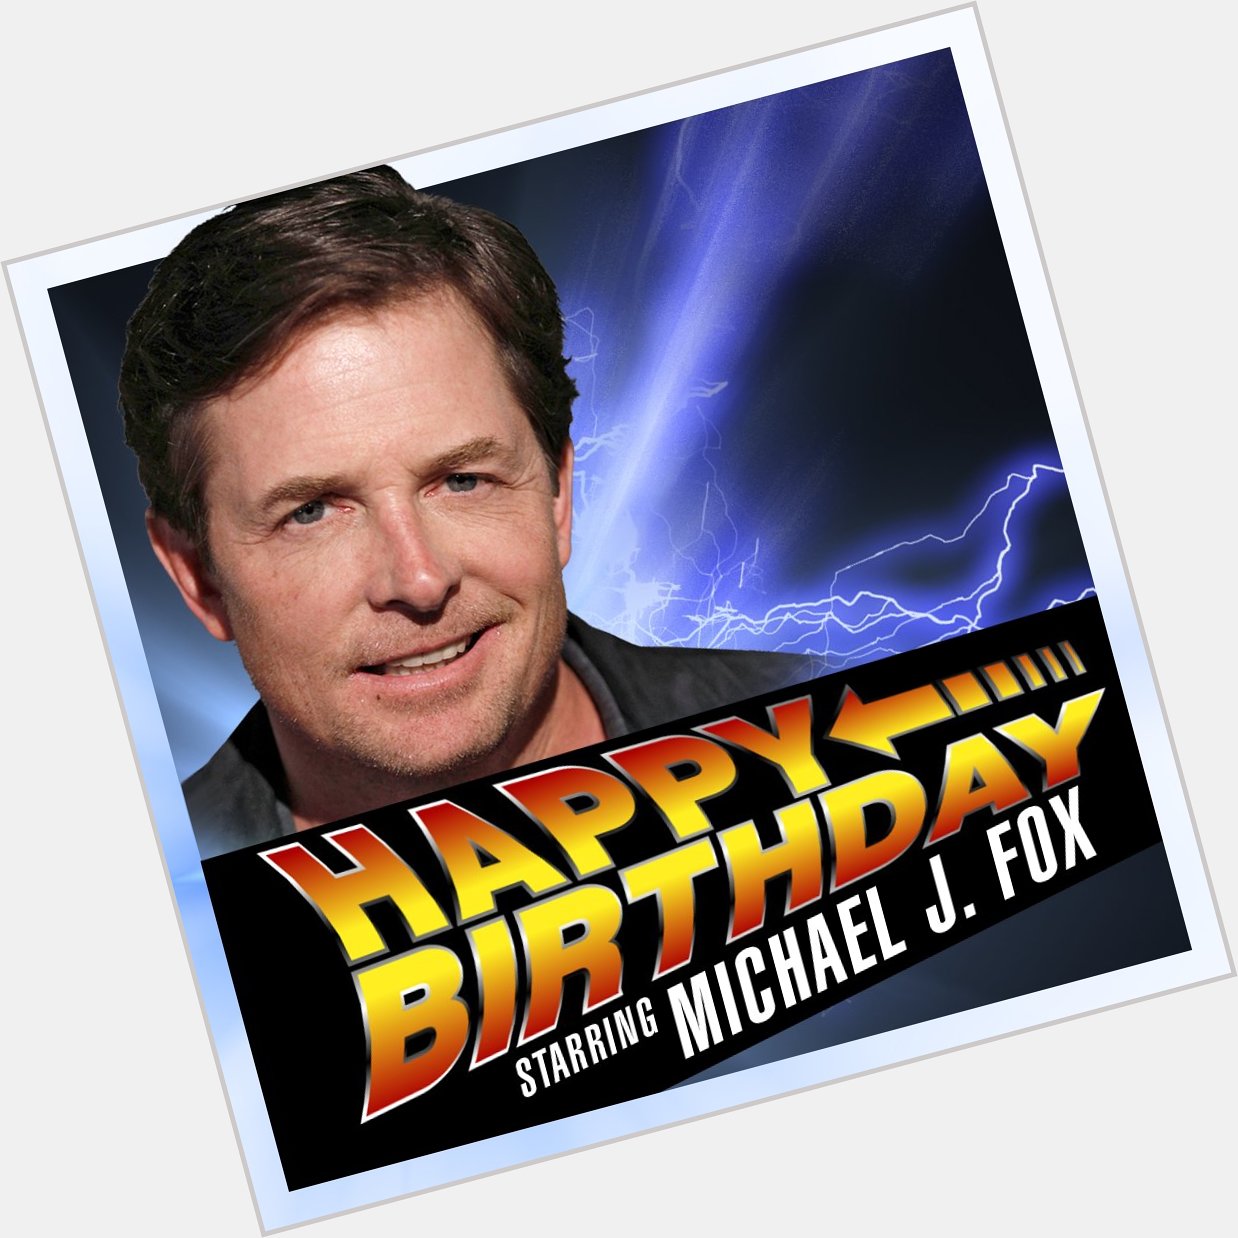 Happy birthday to the great Michael J. Fox! 